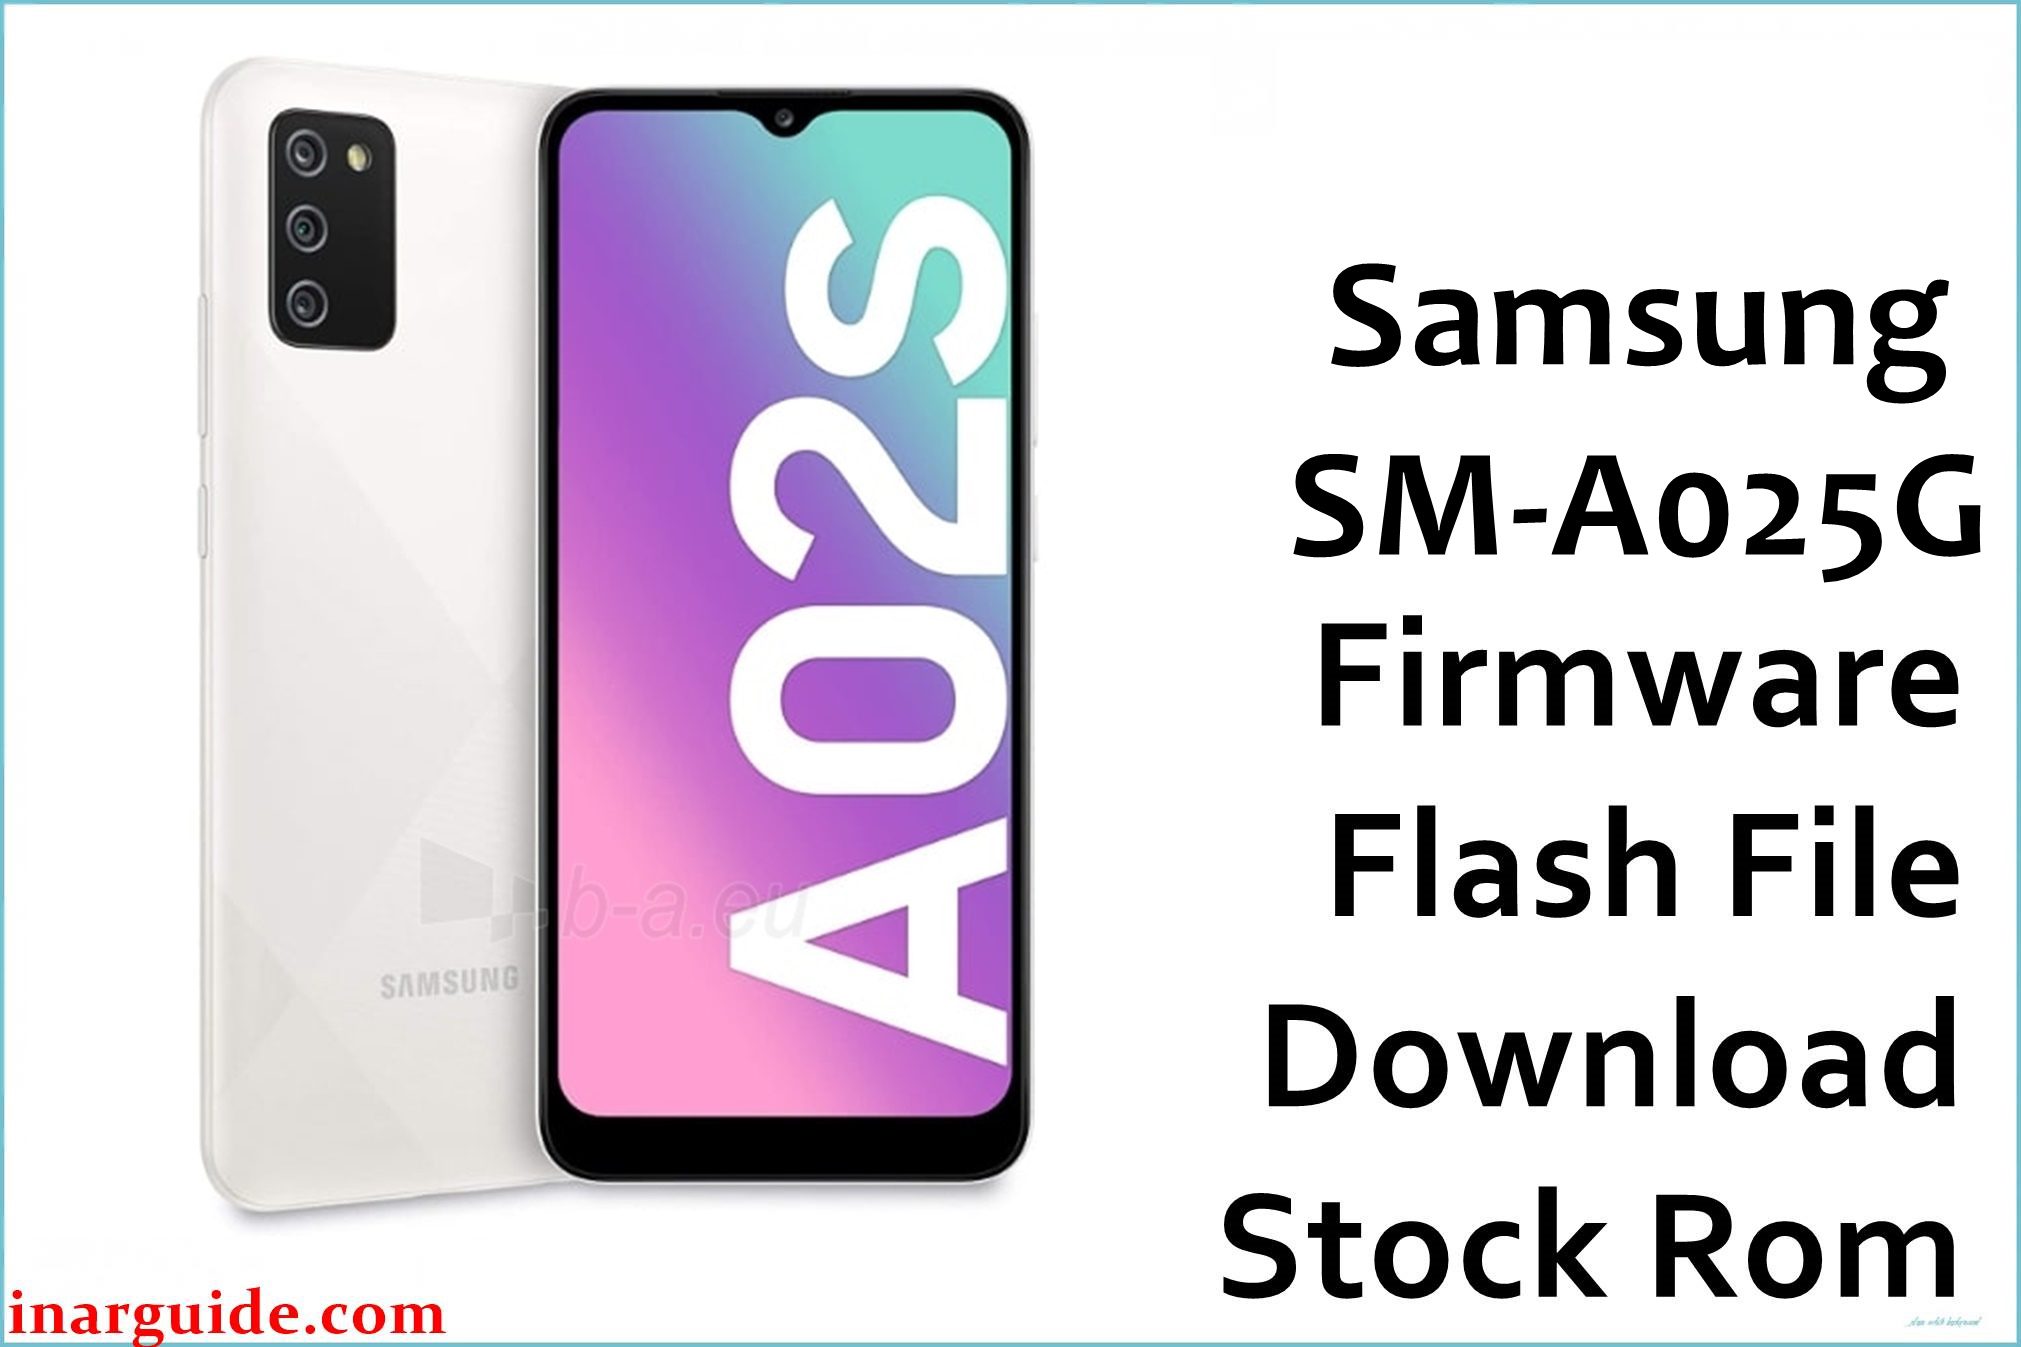 Samsung Galaxy A02s SM-A025G